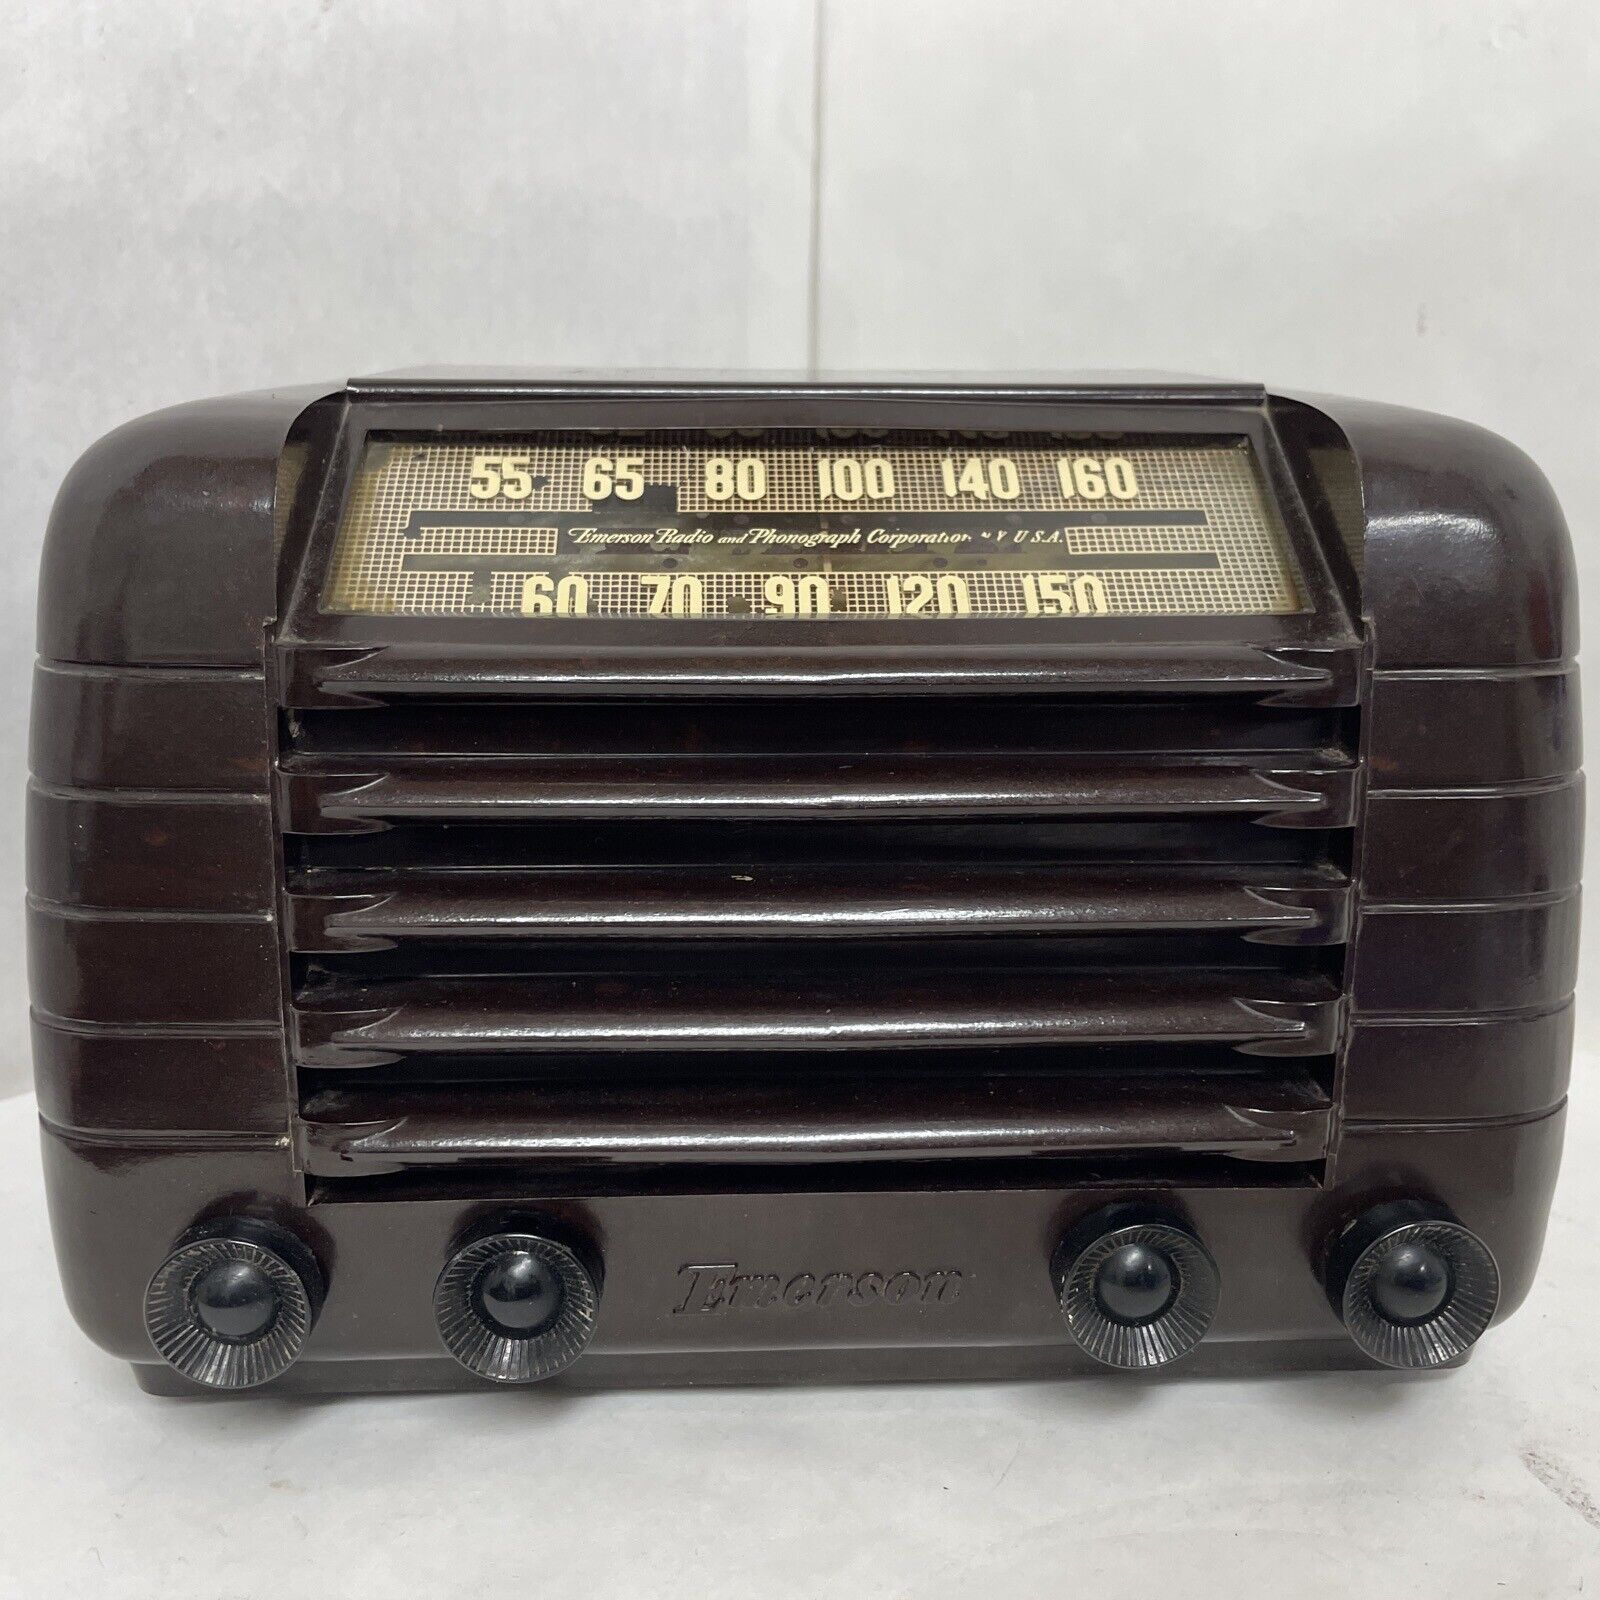 VTG 1947 EMERSON 532 TUBE  RADIO Brown Bakelite AM Tube Radio 4 knobs not tested